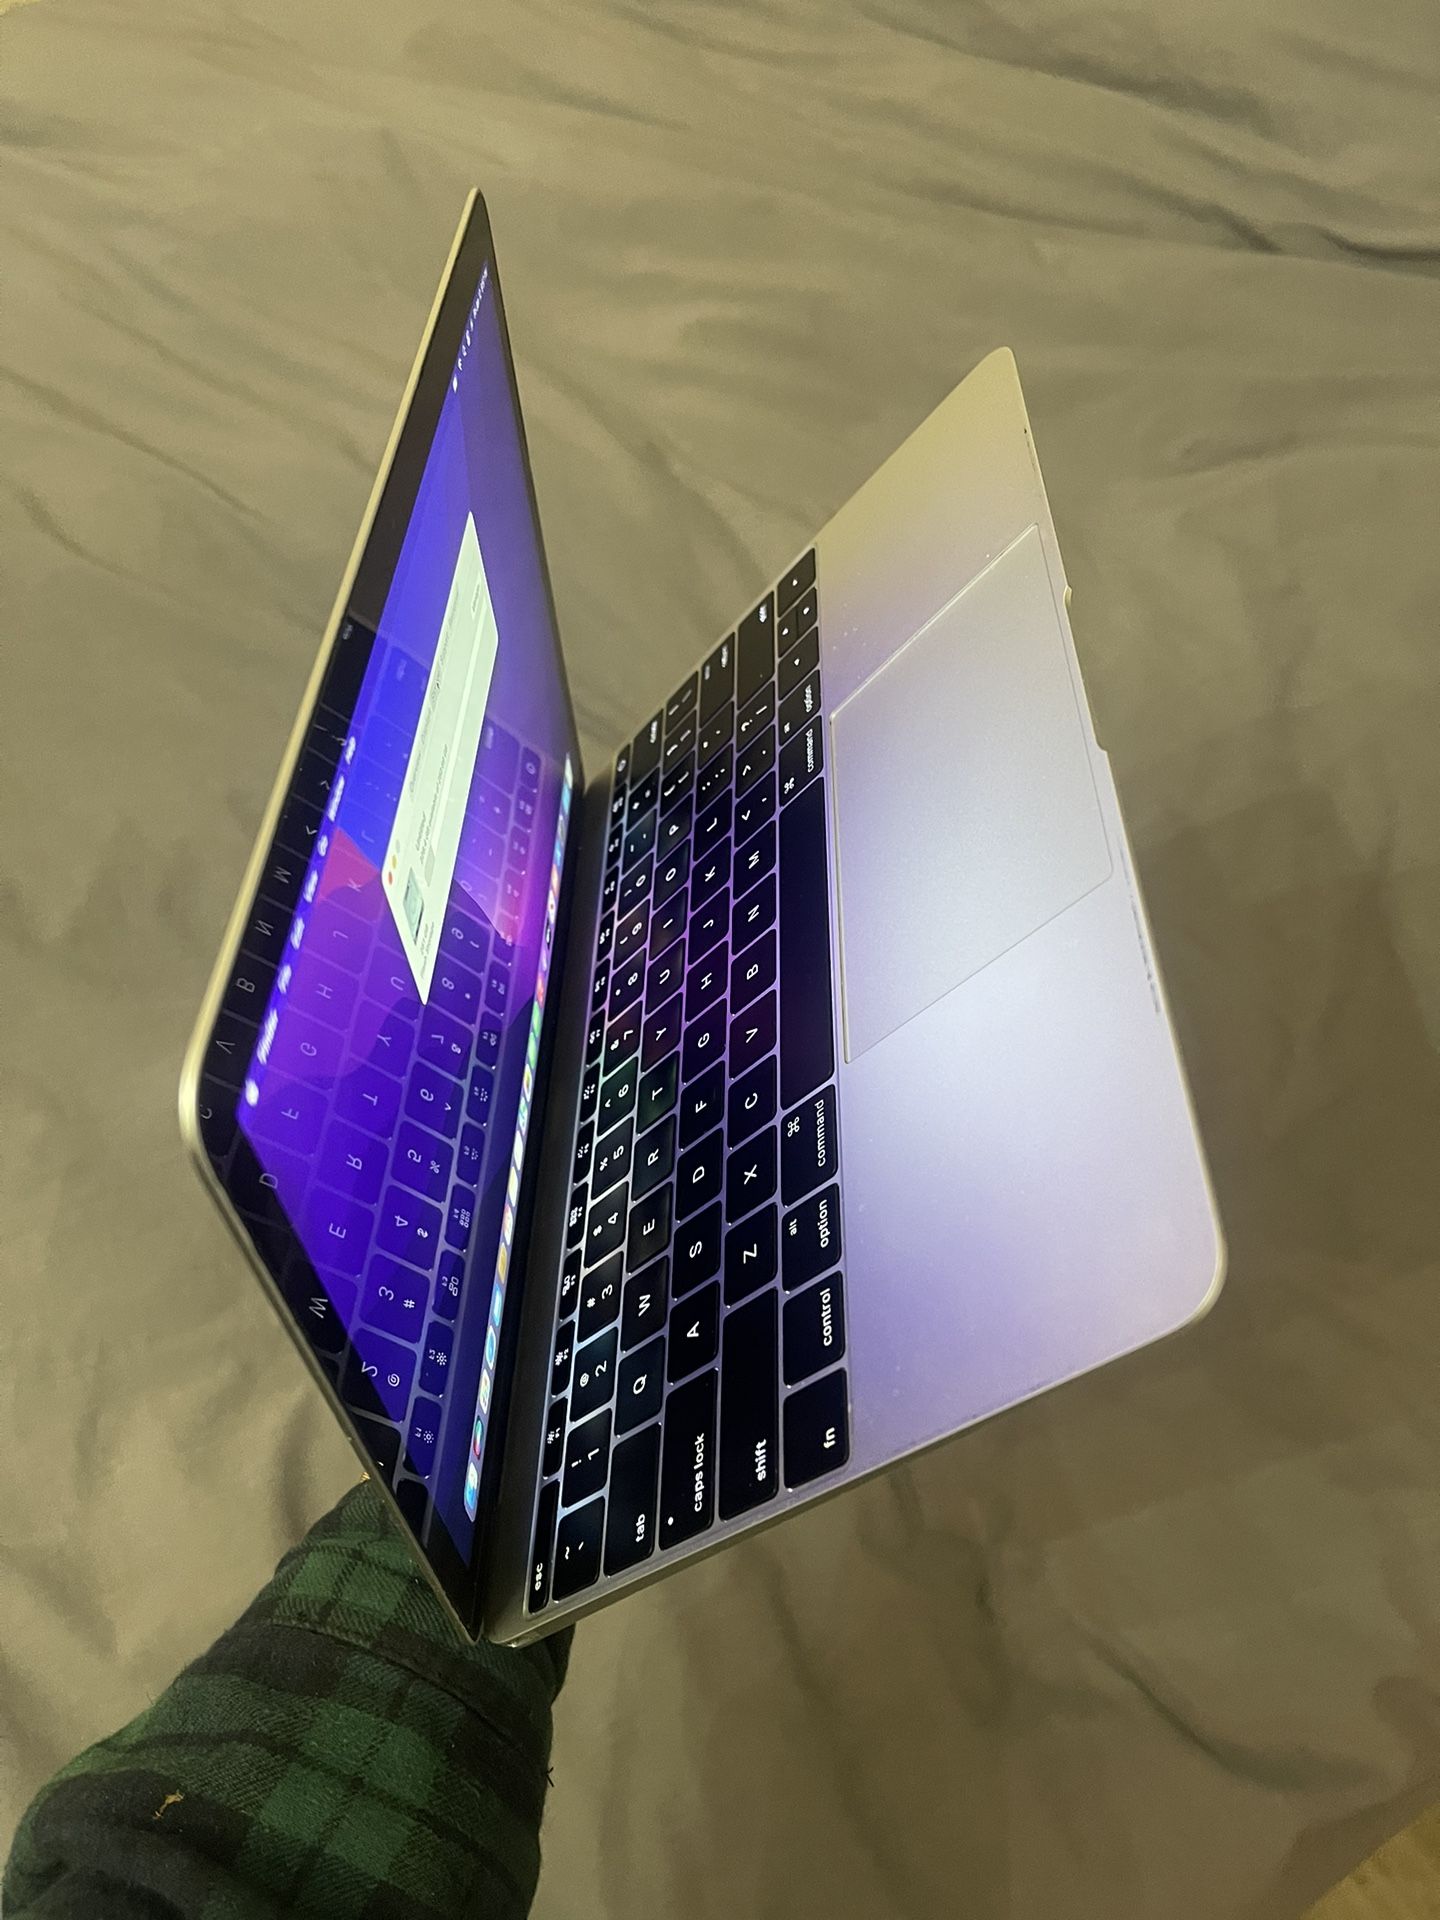 MacBook (Retina, 12-inch, Early 2016)